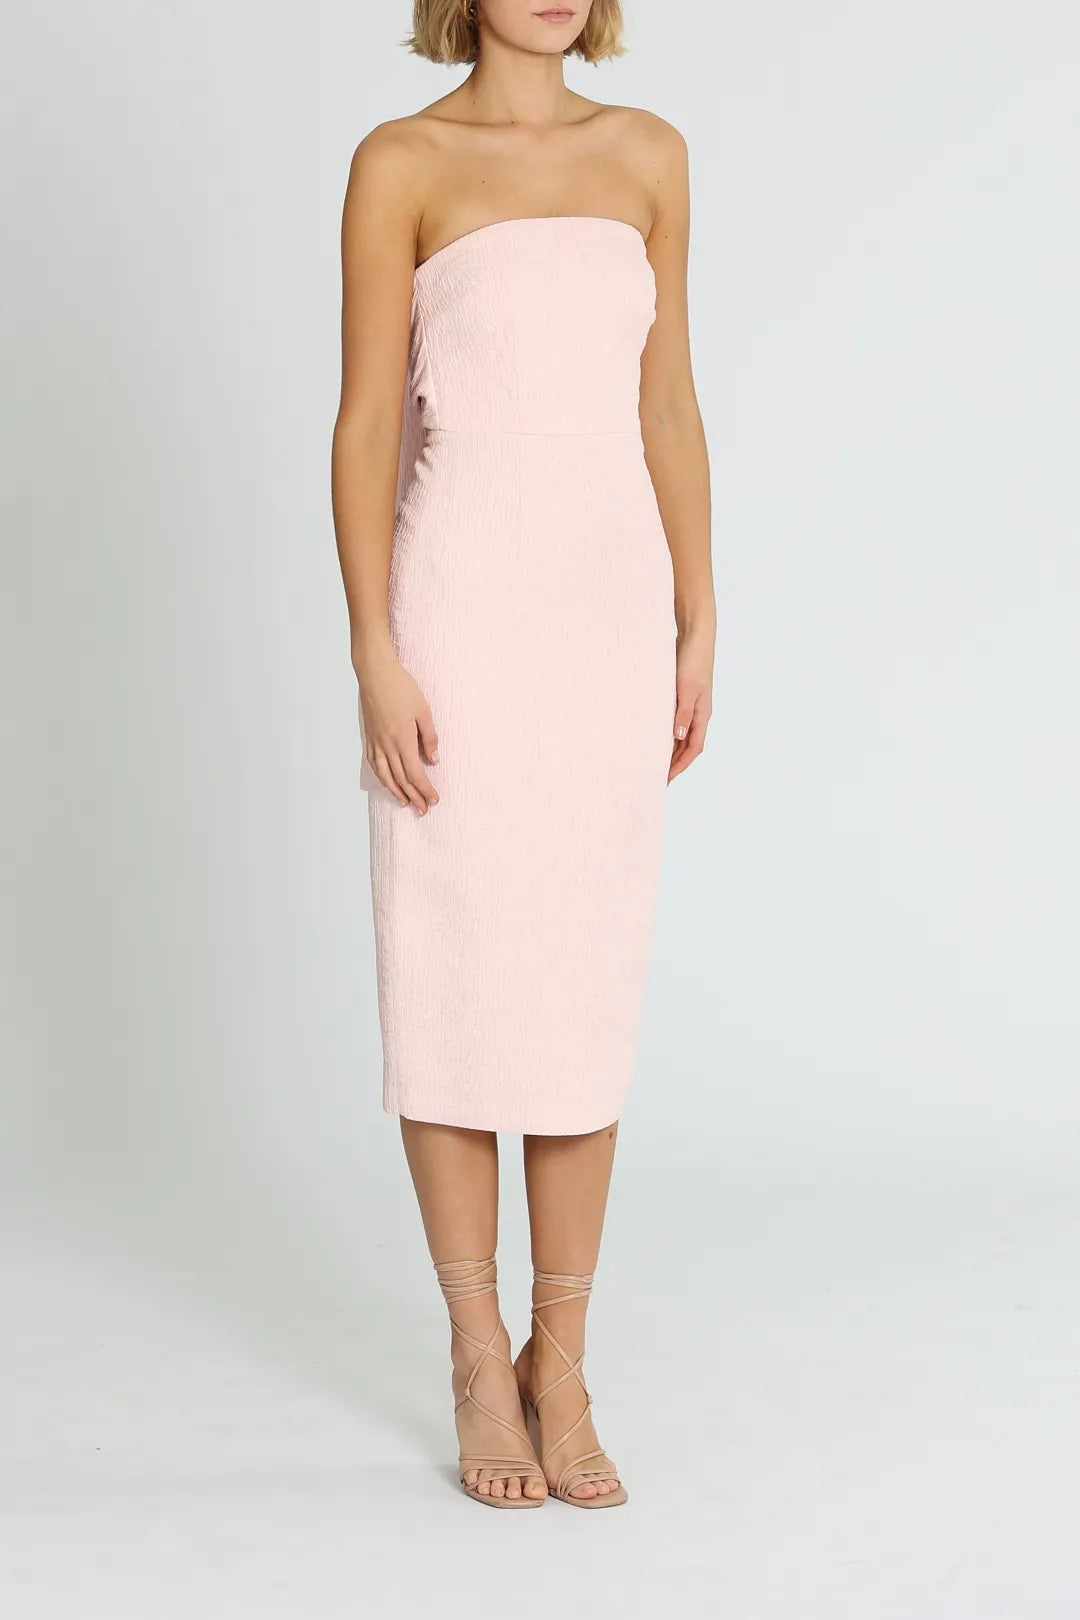 Rebecca Vallance Pink Harlow Dress